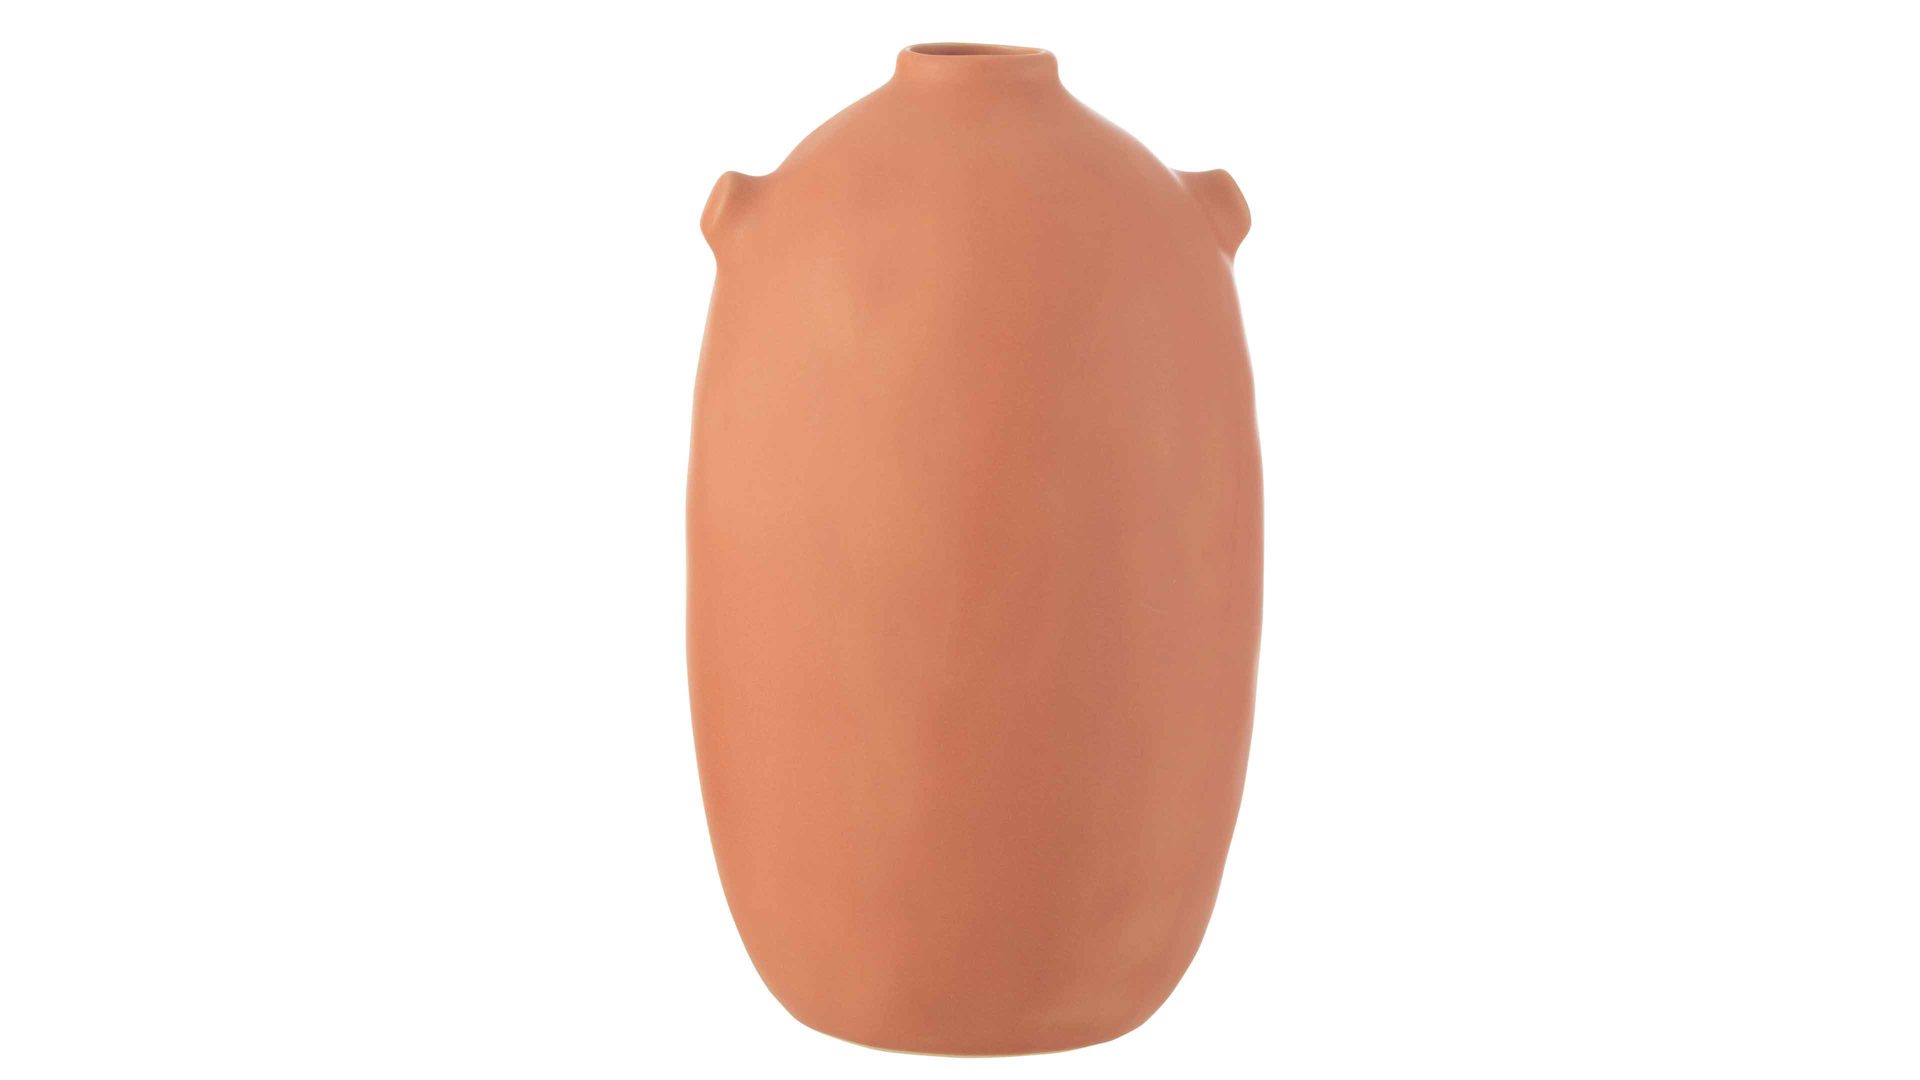 Vase Interliving BEST BUDDYS! aus Keramik in Orange Interliving BEST BUDDYS! Vase Renaissance orangefarbene Keramik - Höhe ca. 29 cm